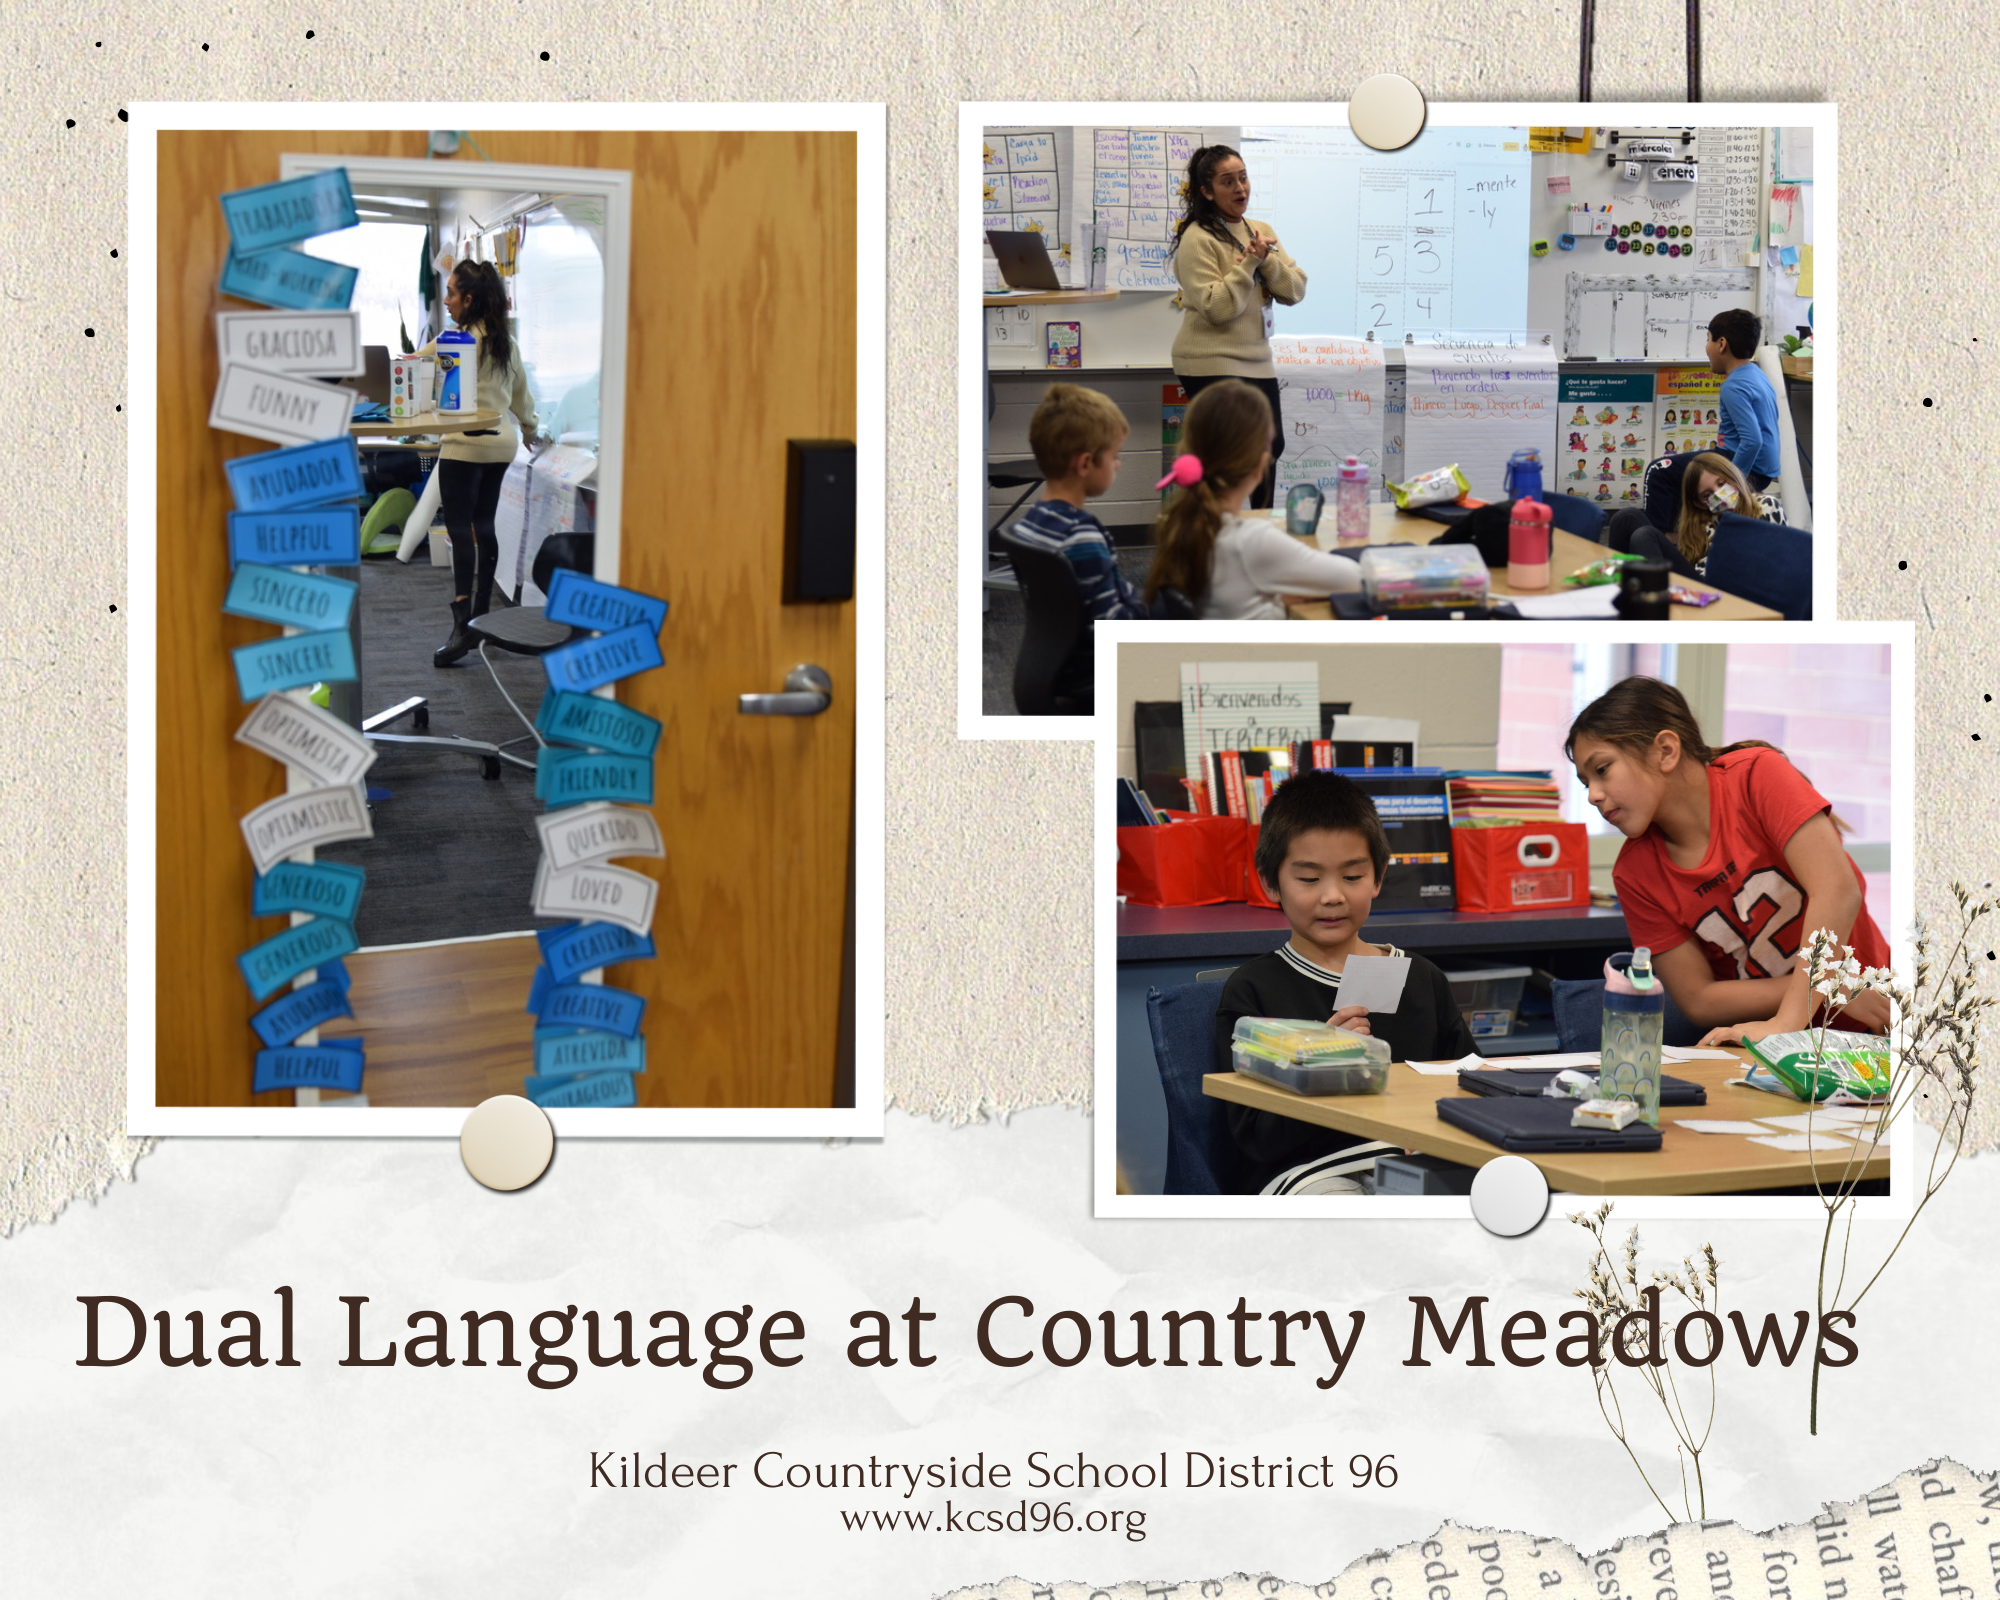 Country Meadows' Dual Language Class